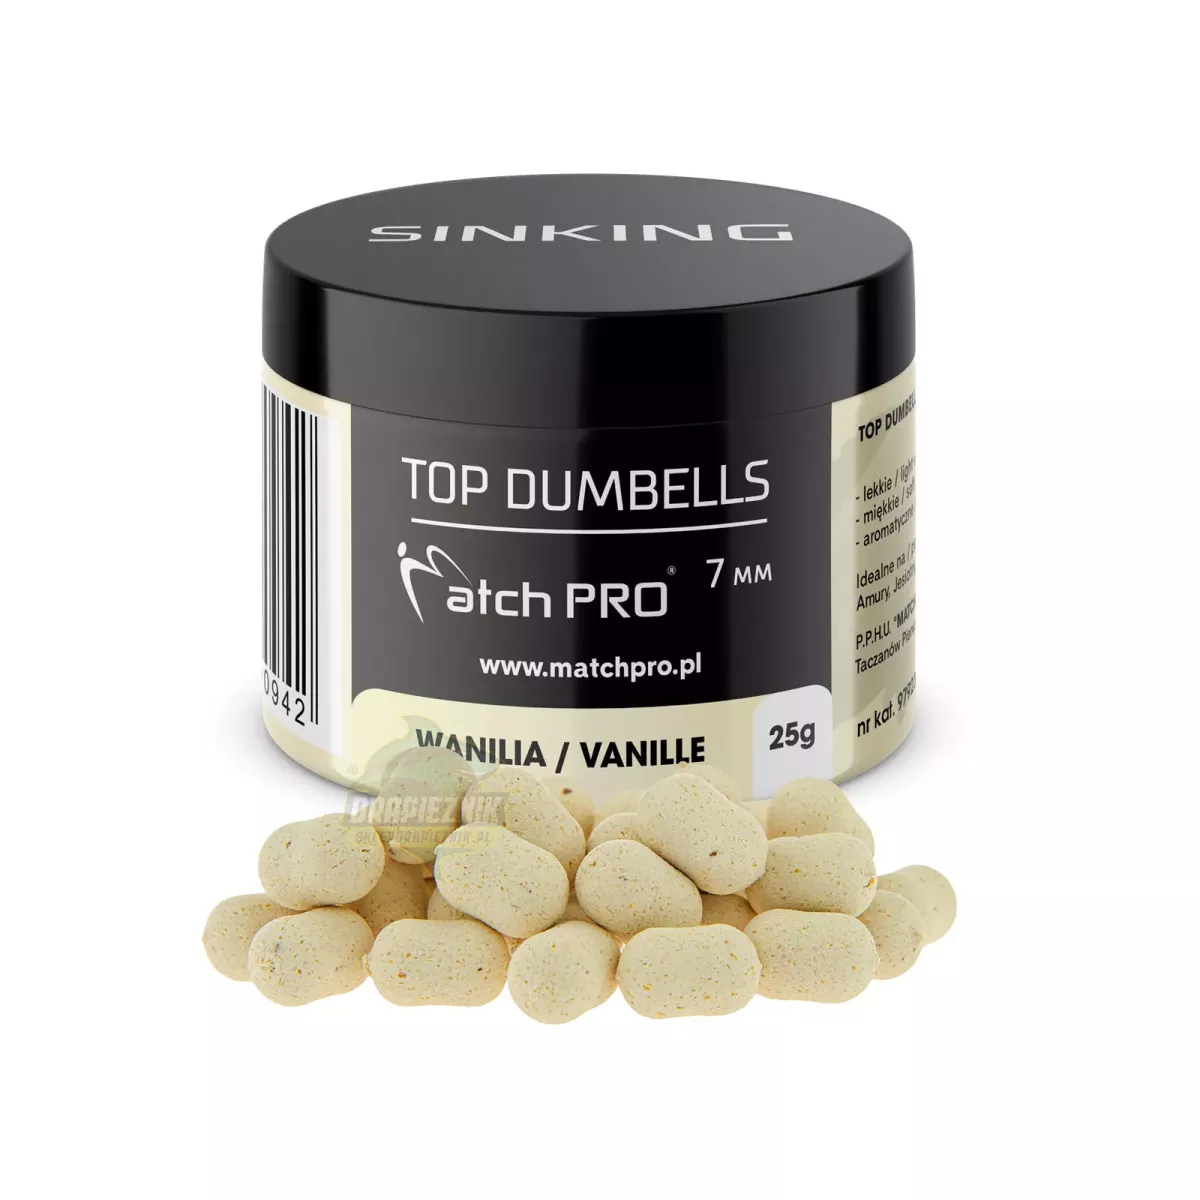 Przynęty MatchPro Top Dumbells Sinking 7mm - WANILIA